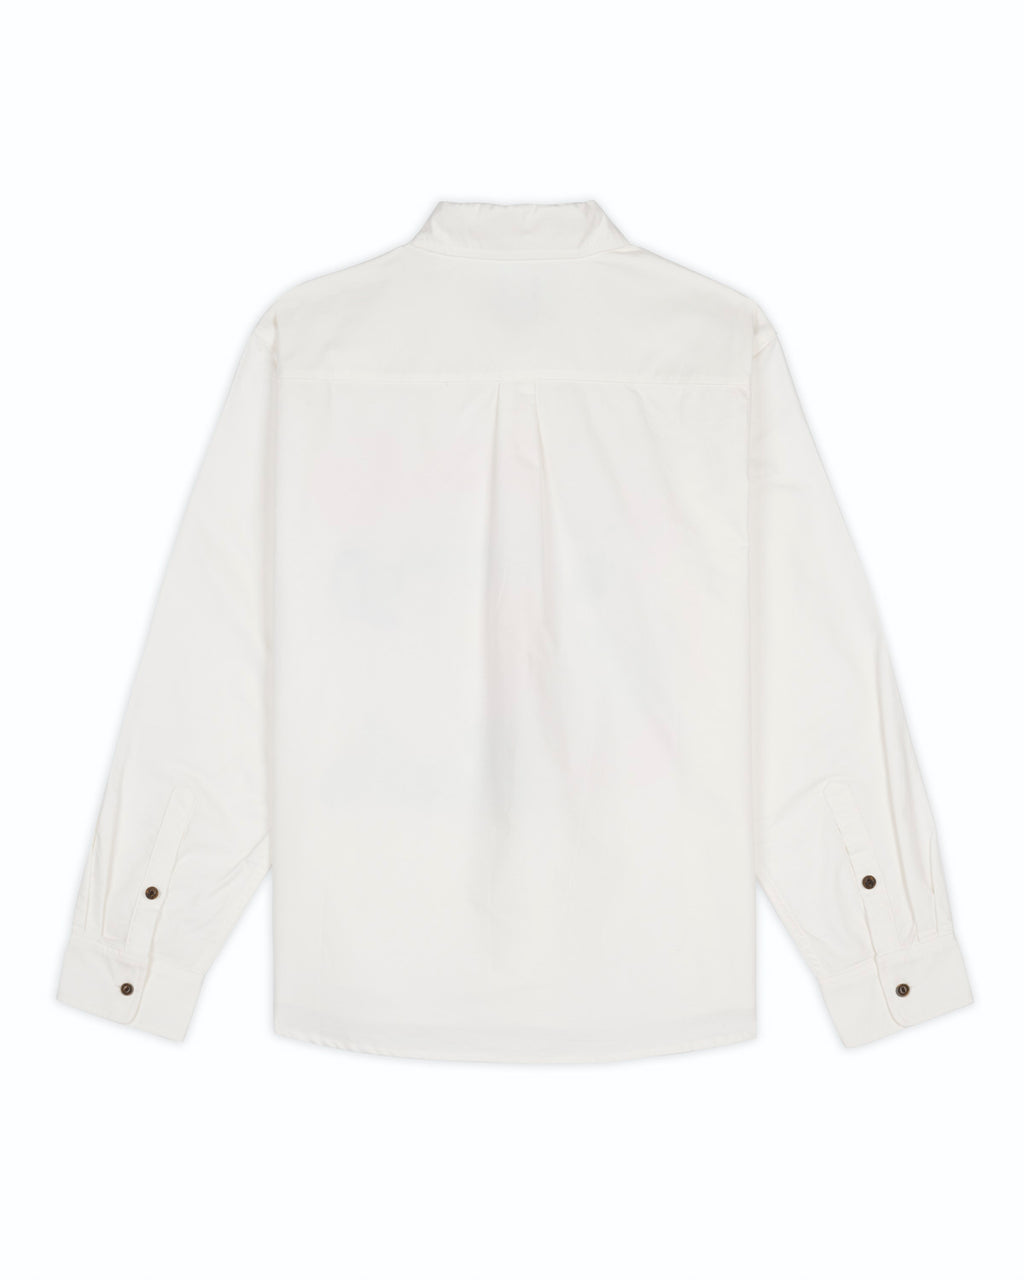 Alfie Cotton Oxford Shirt, White